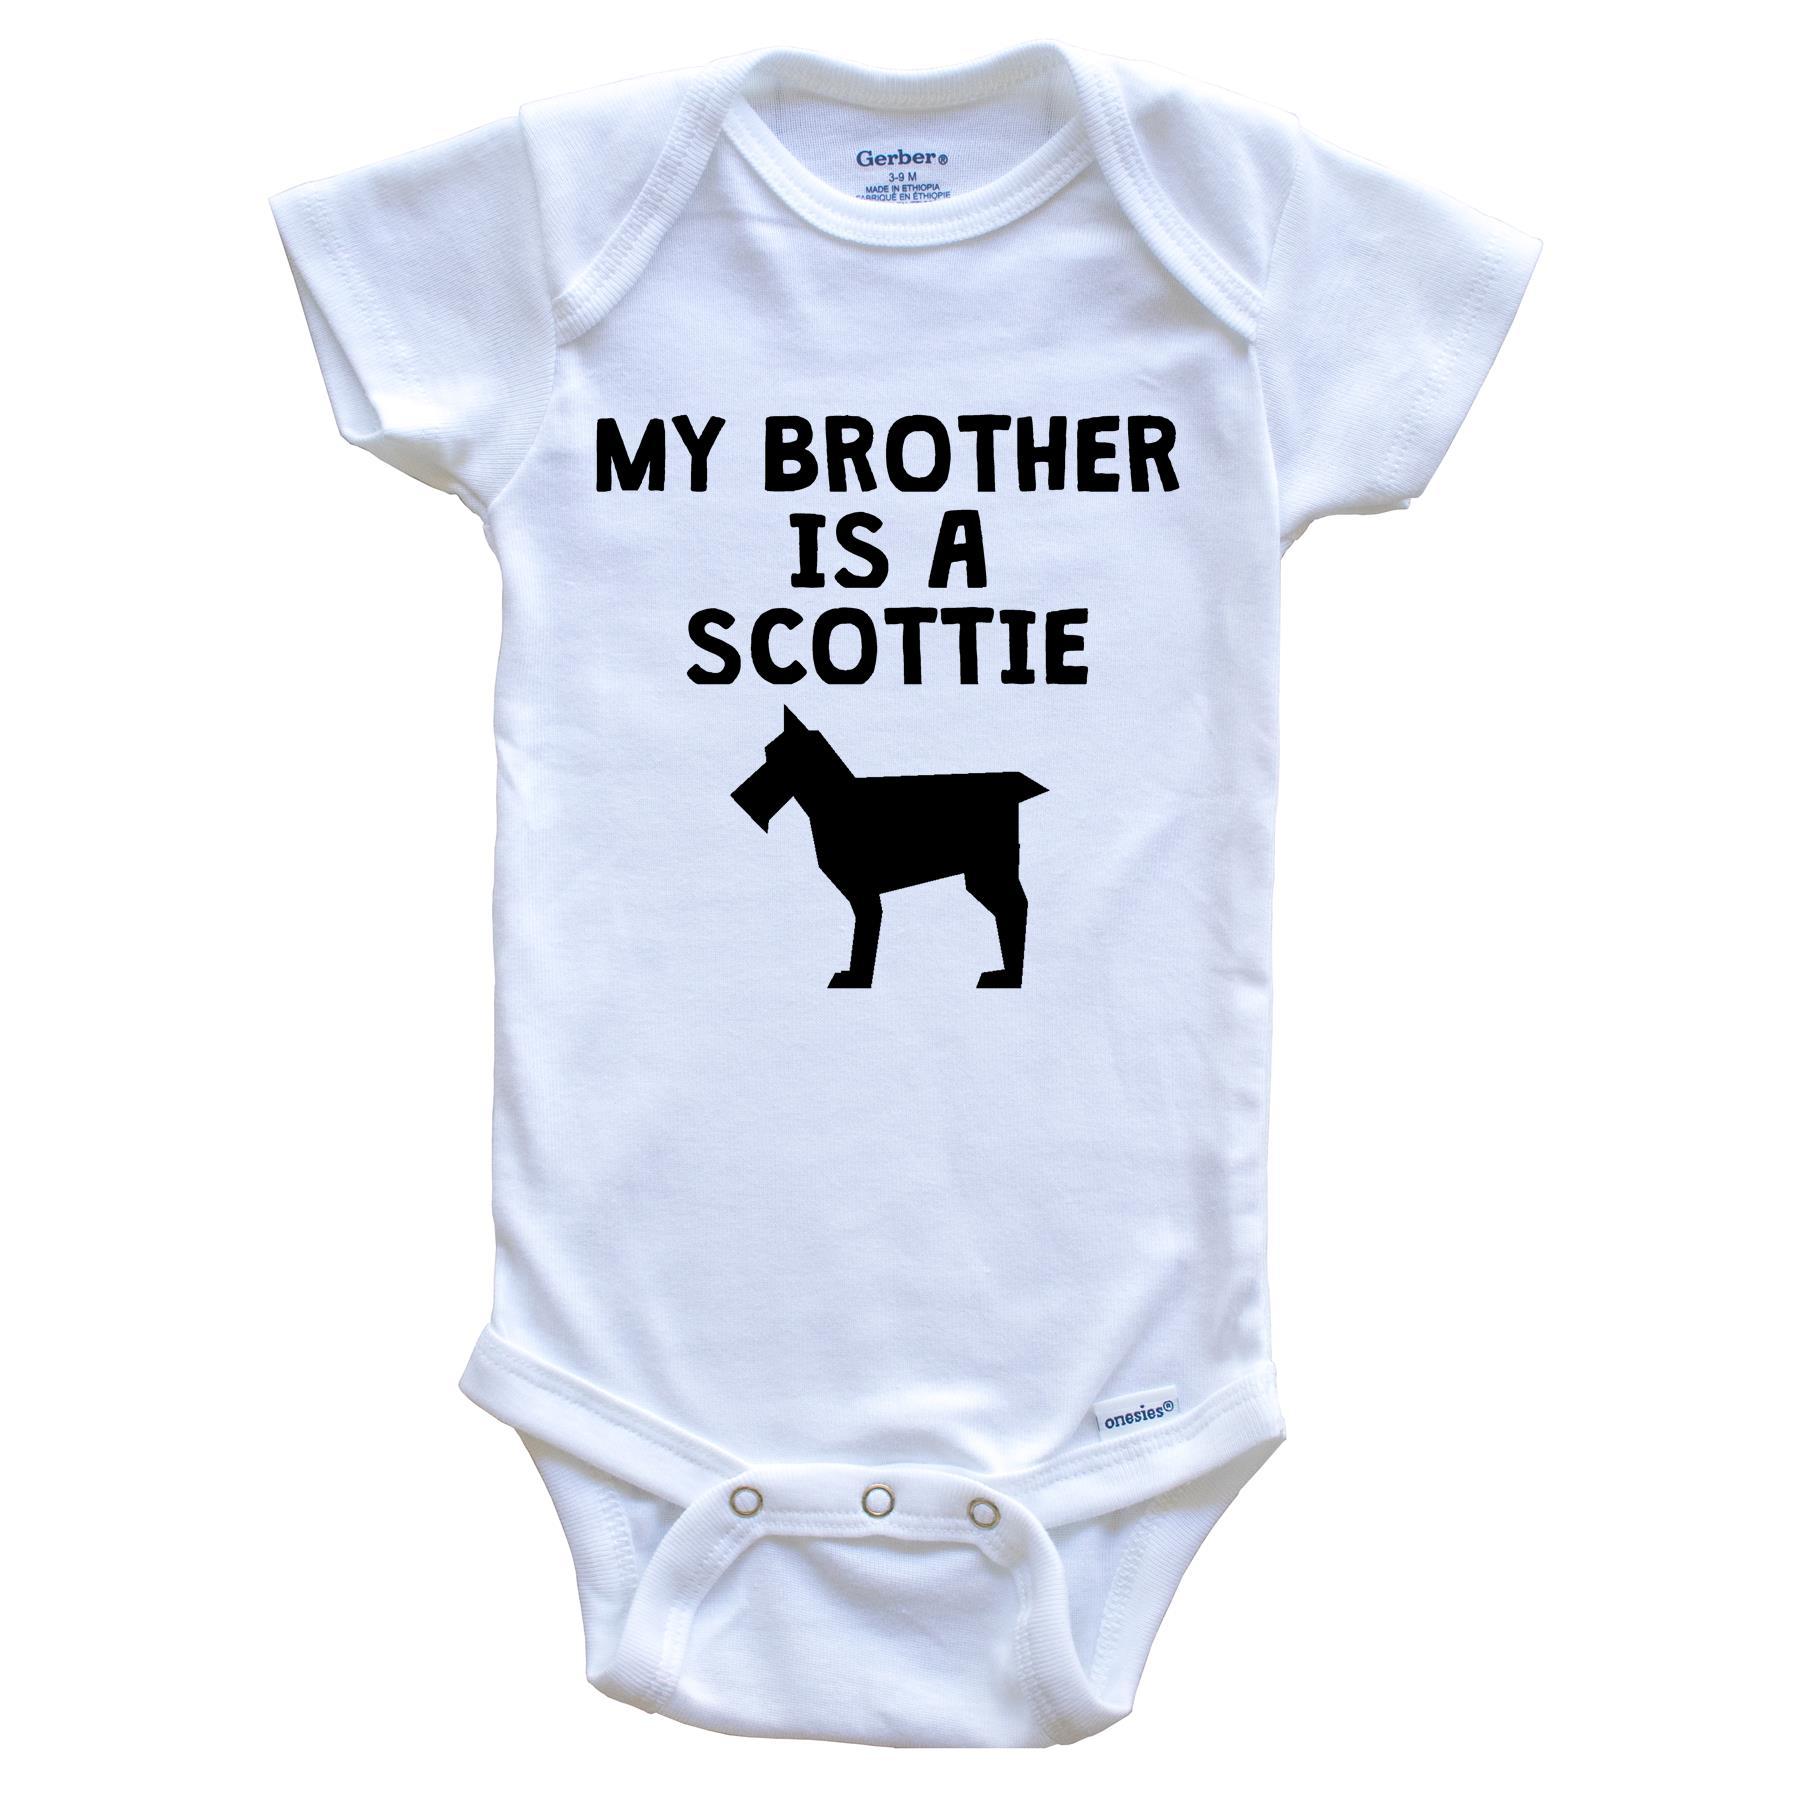 My Brother Is A Scottie Baby Onesie